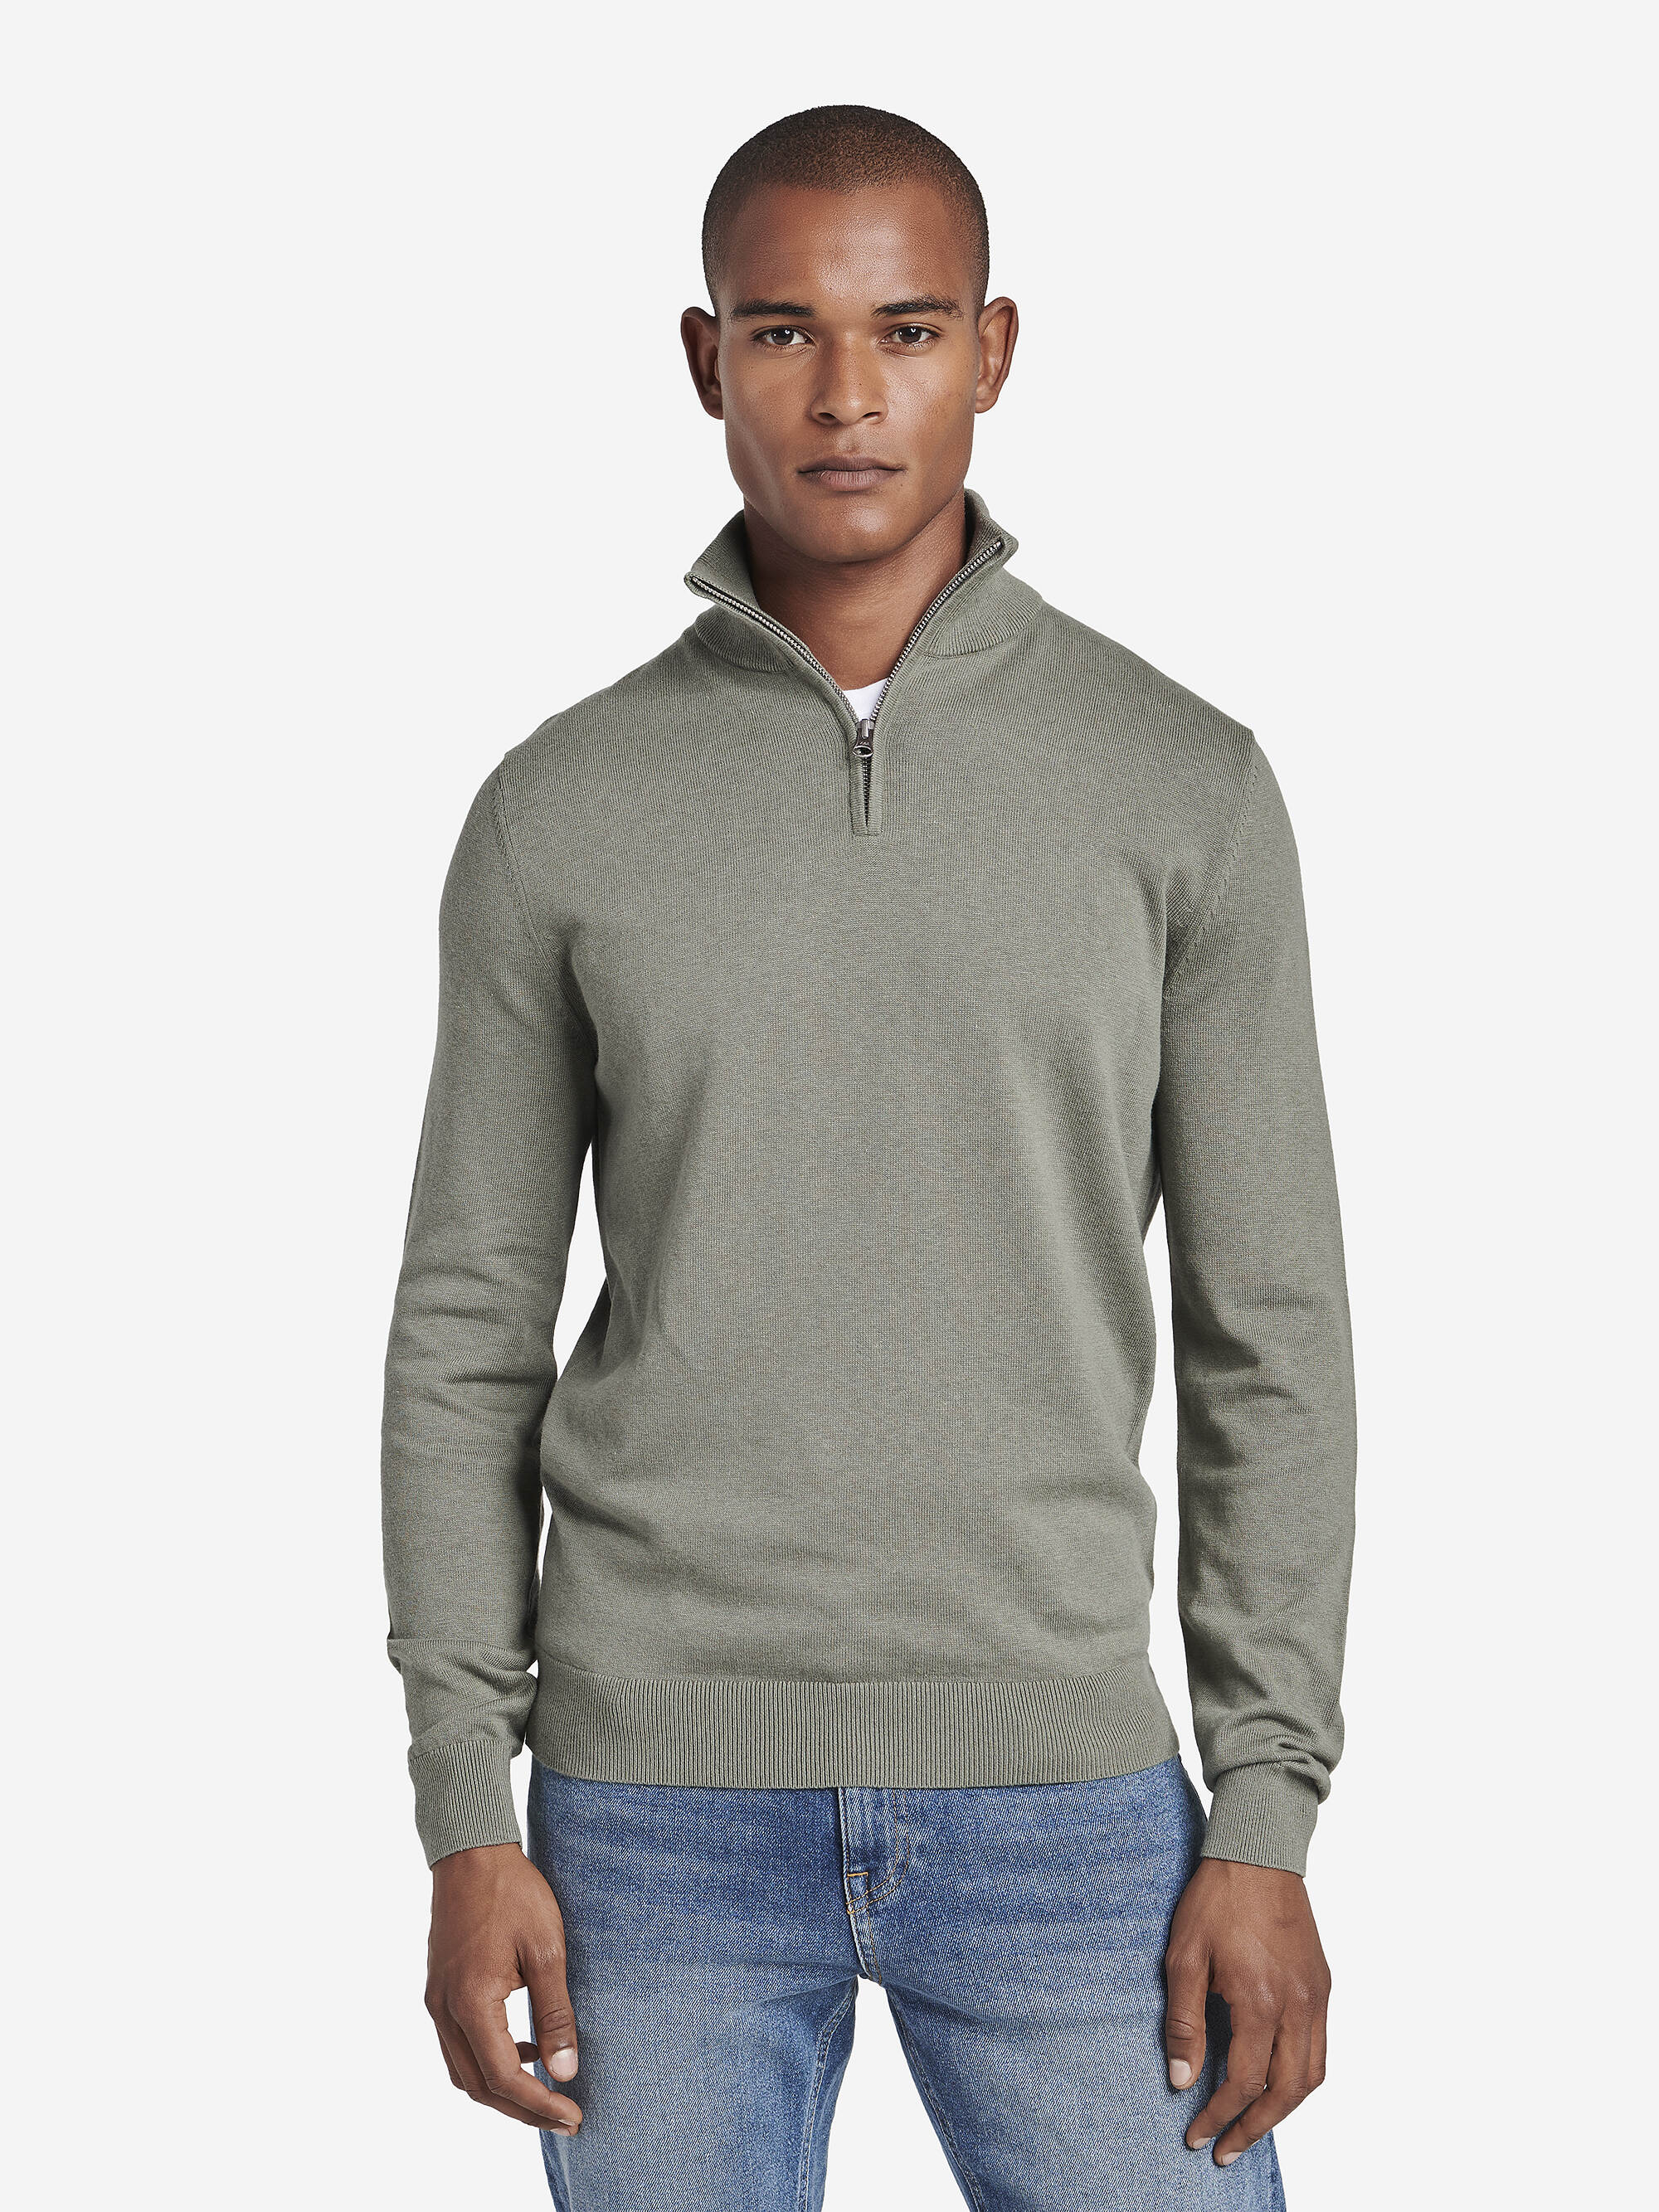 Hot Sales 50% Off- Men's Cotton Silk Half-Zip Jumper Pullover (Buy 2 Free Shipping)